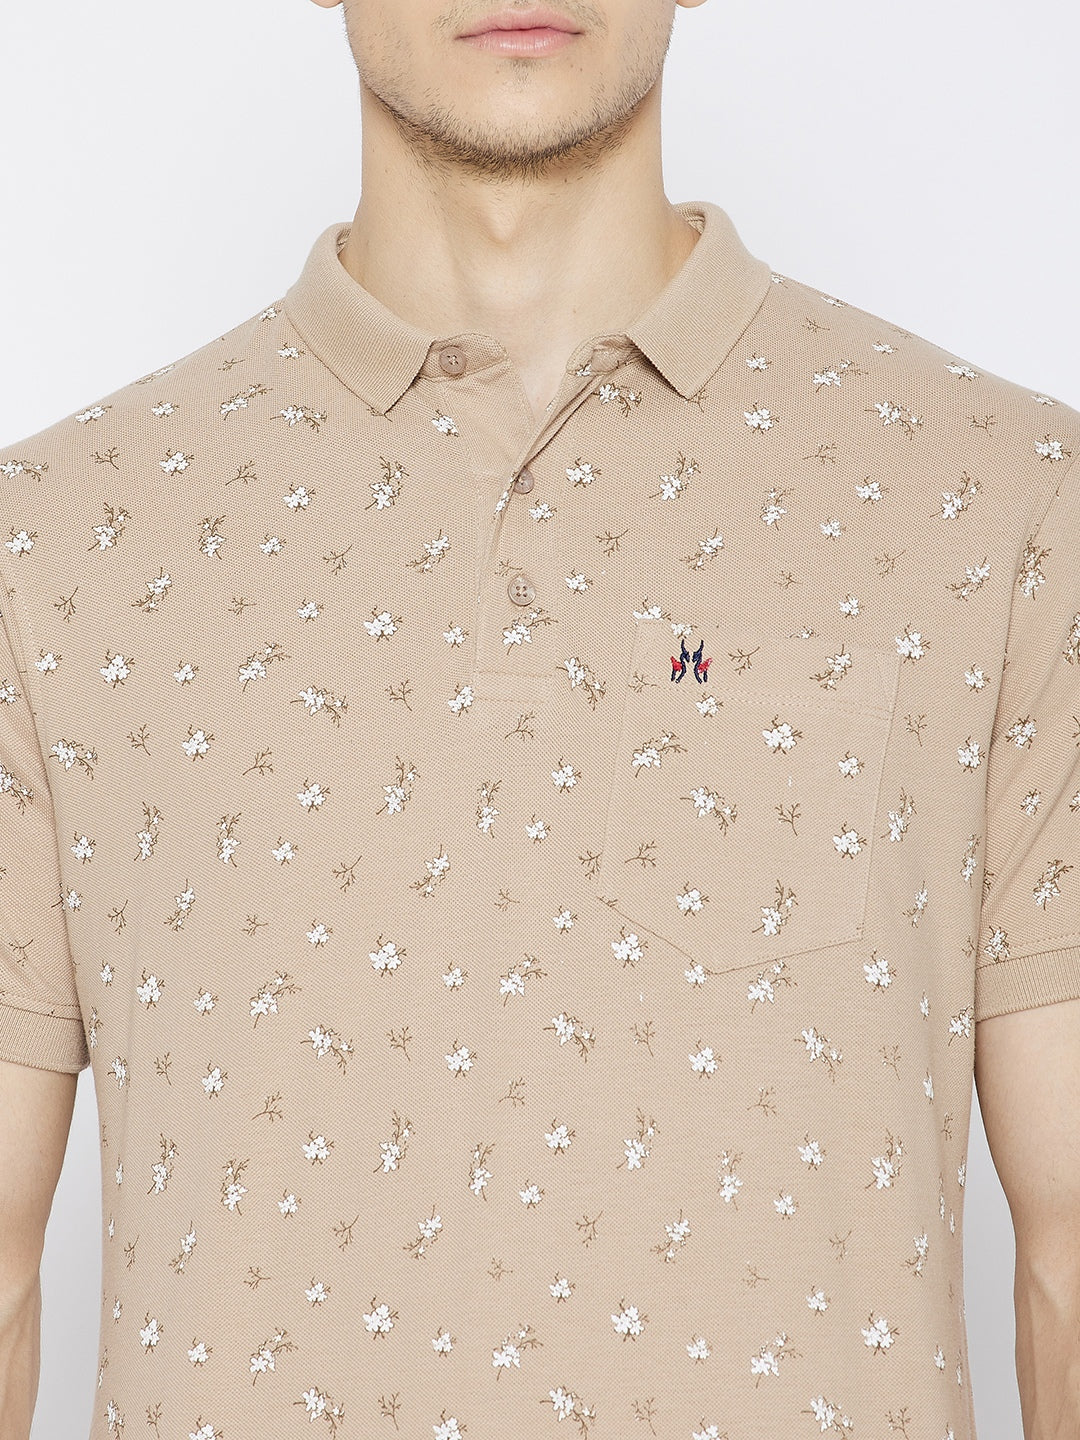 Beige Printed Polo Neck T-shirt - Men T-Shirts